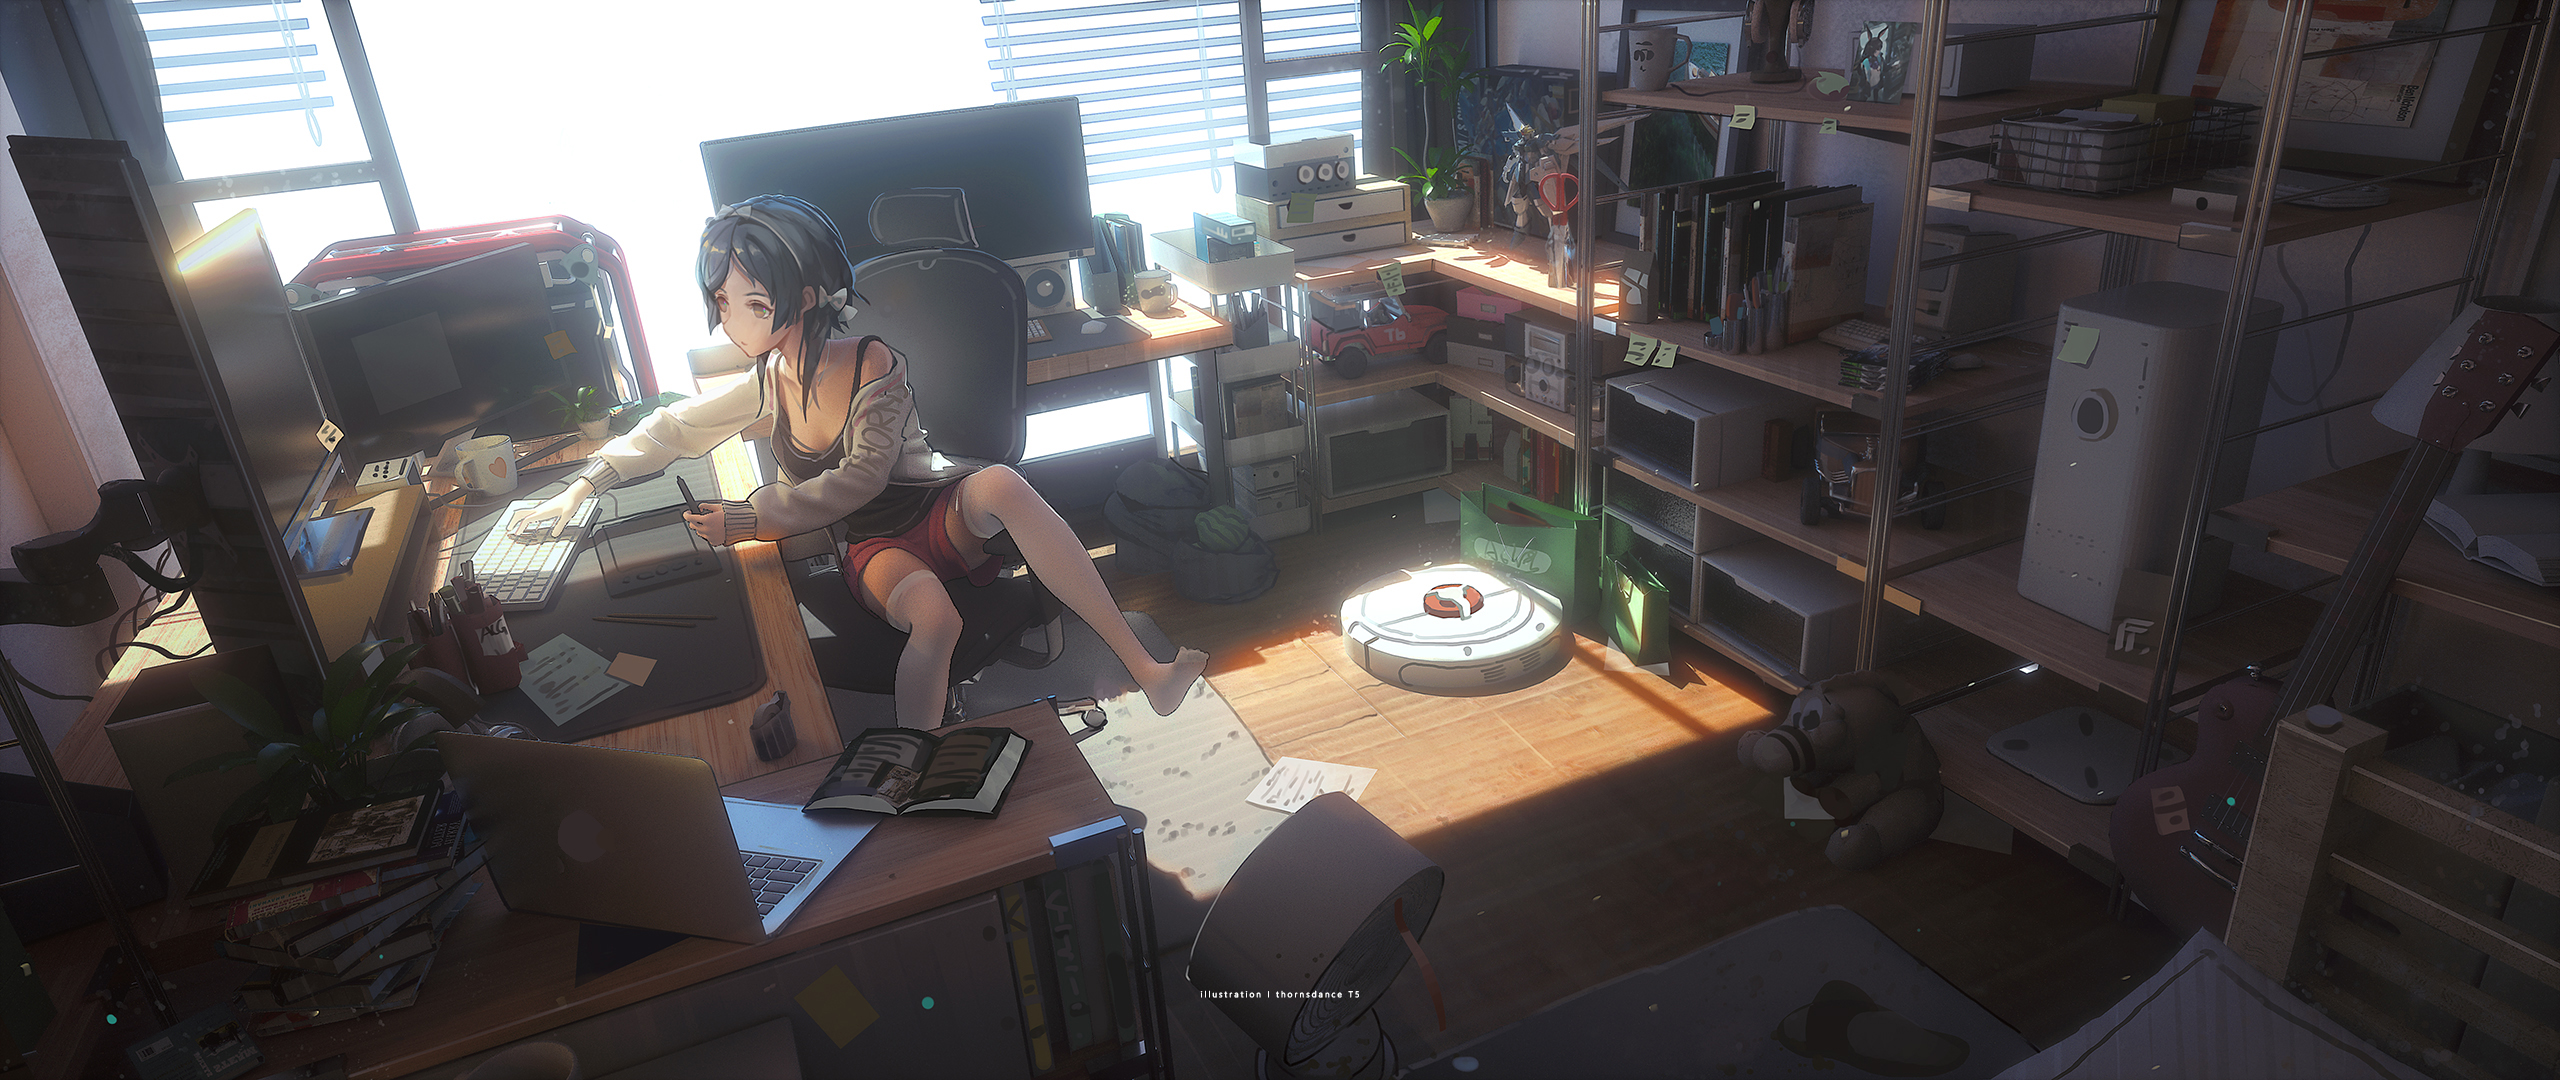 Anime 3D Animation Watermarked Anime Girls Desk Computer Sitting Thigh Highs Room Artwork Digital Ar 2560x1080